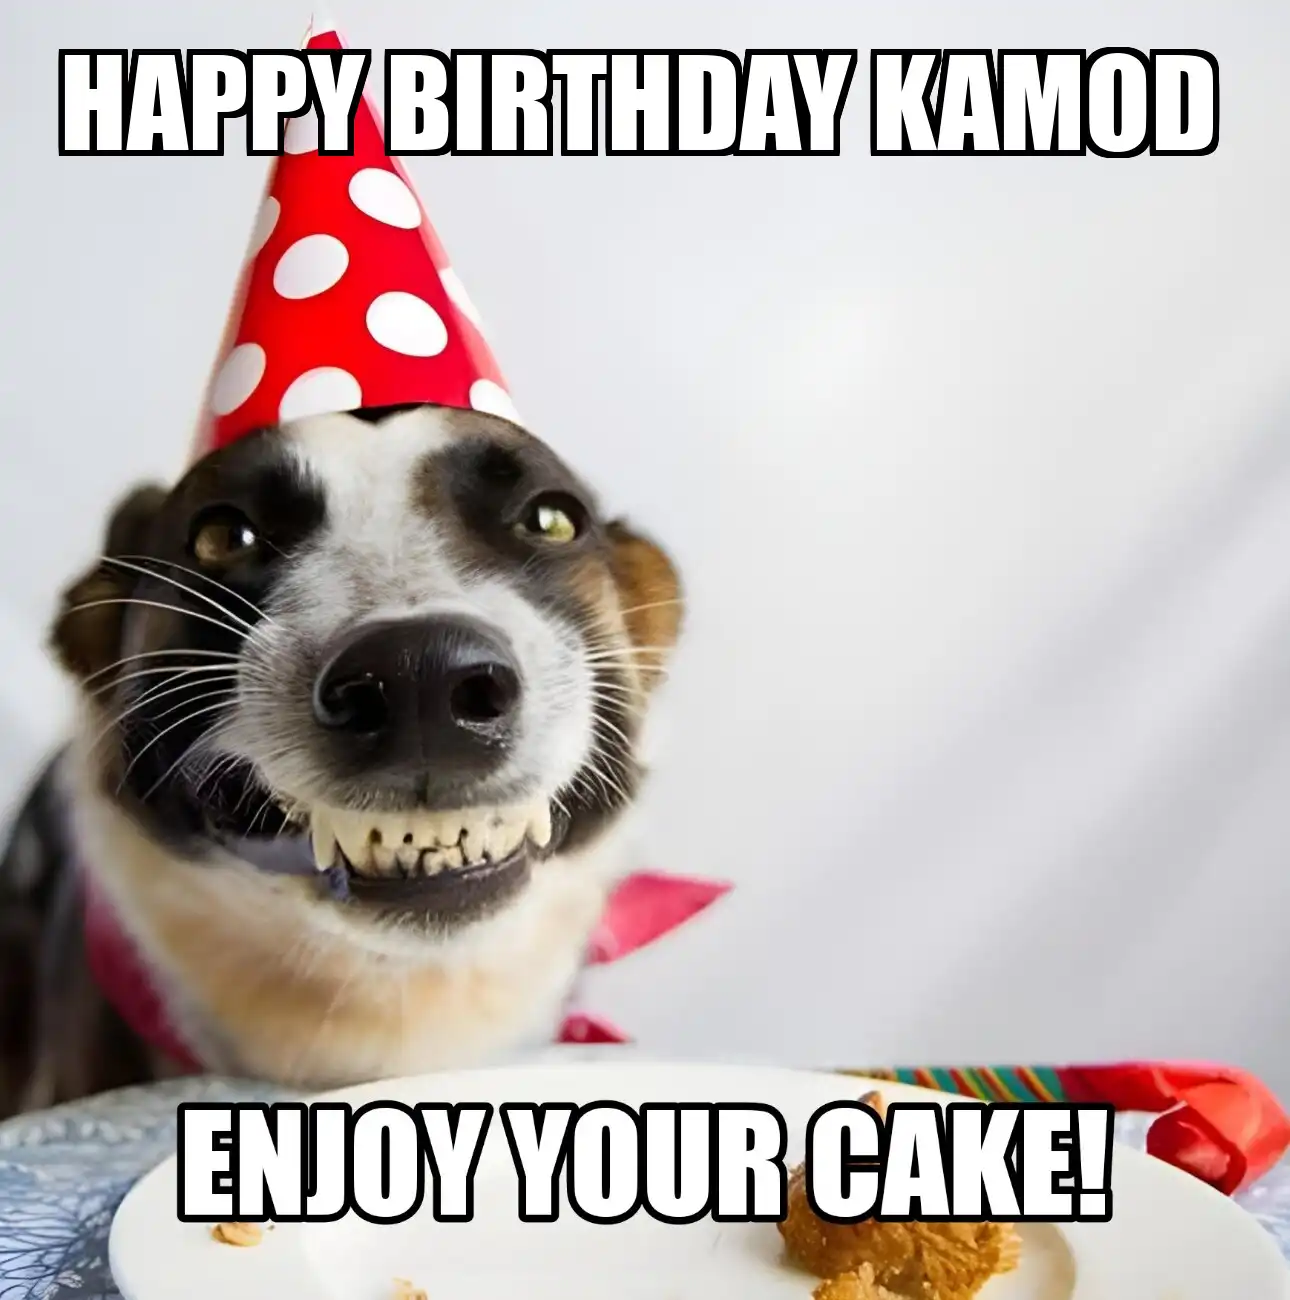 Happy Birthday Kamod Enjoy Your Cake Dog Meme